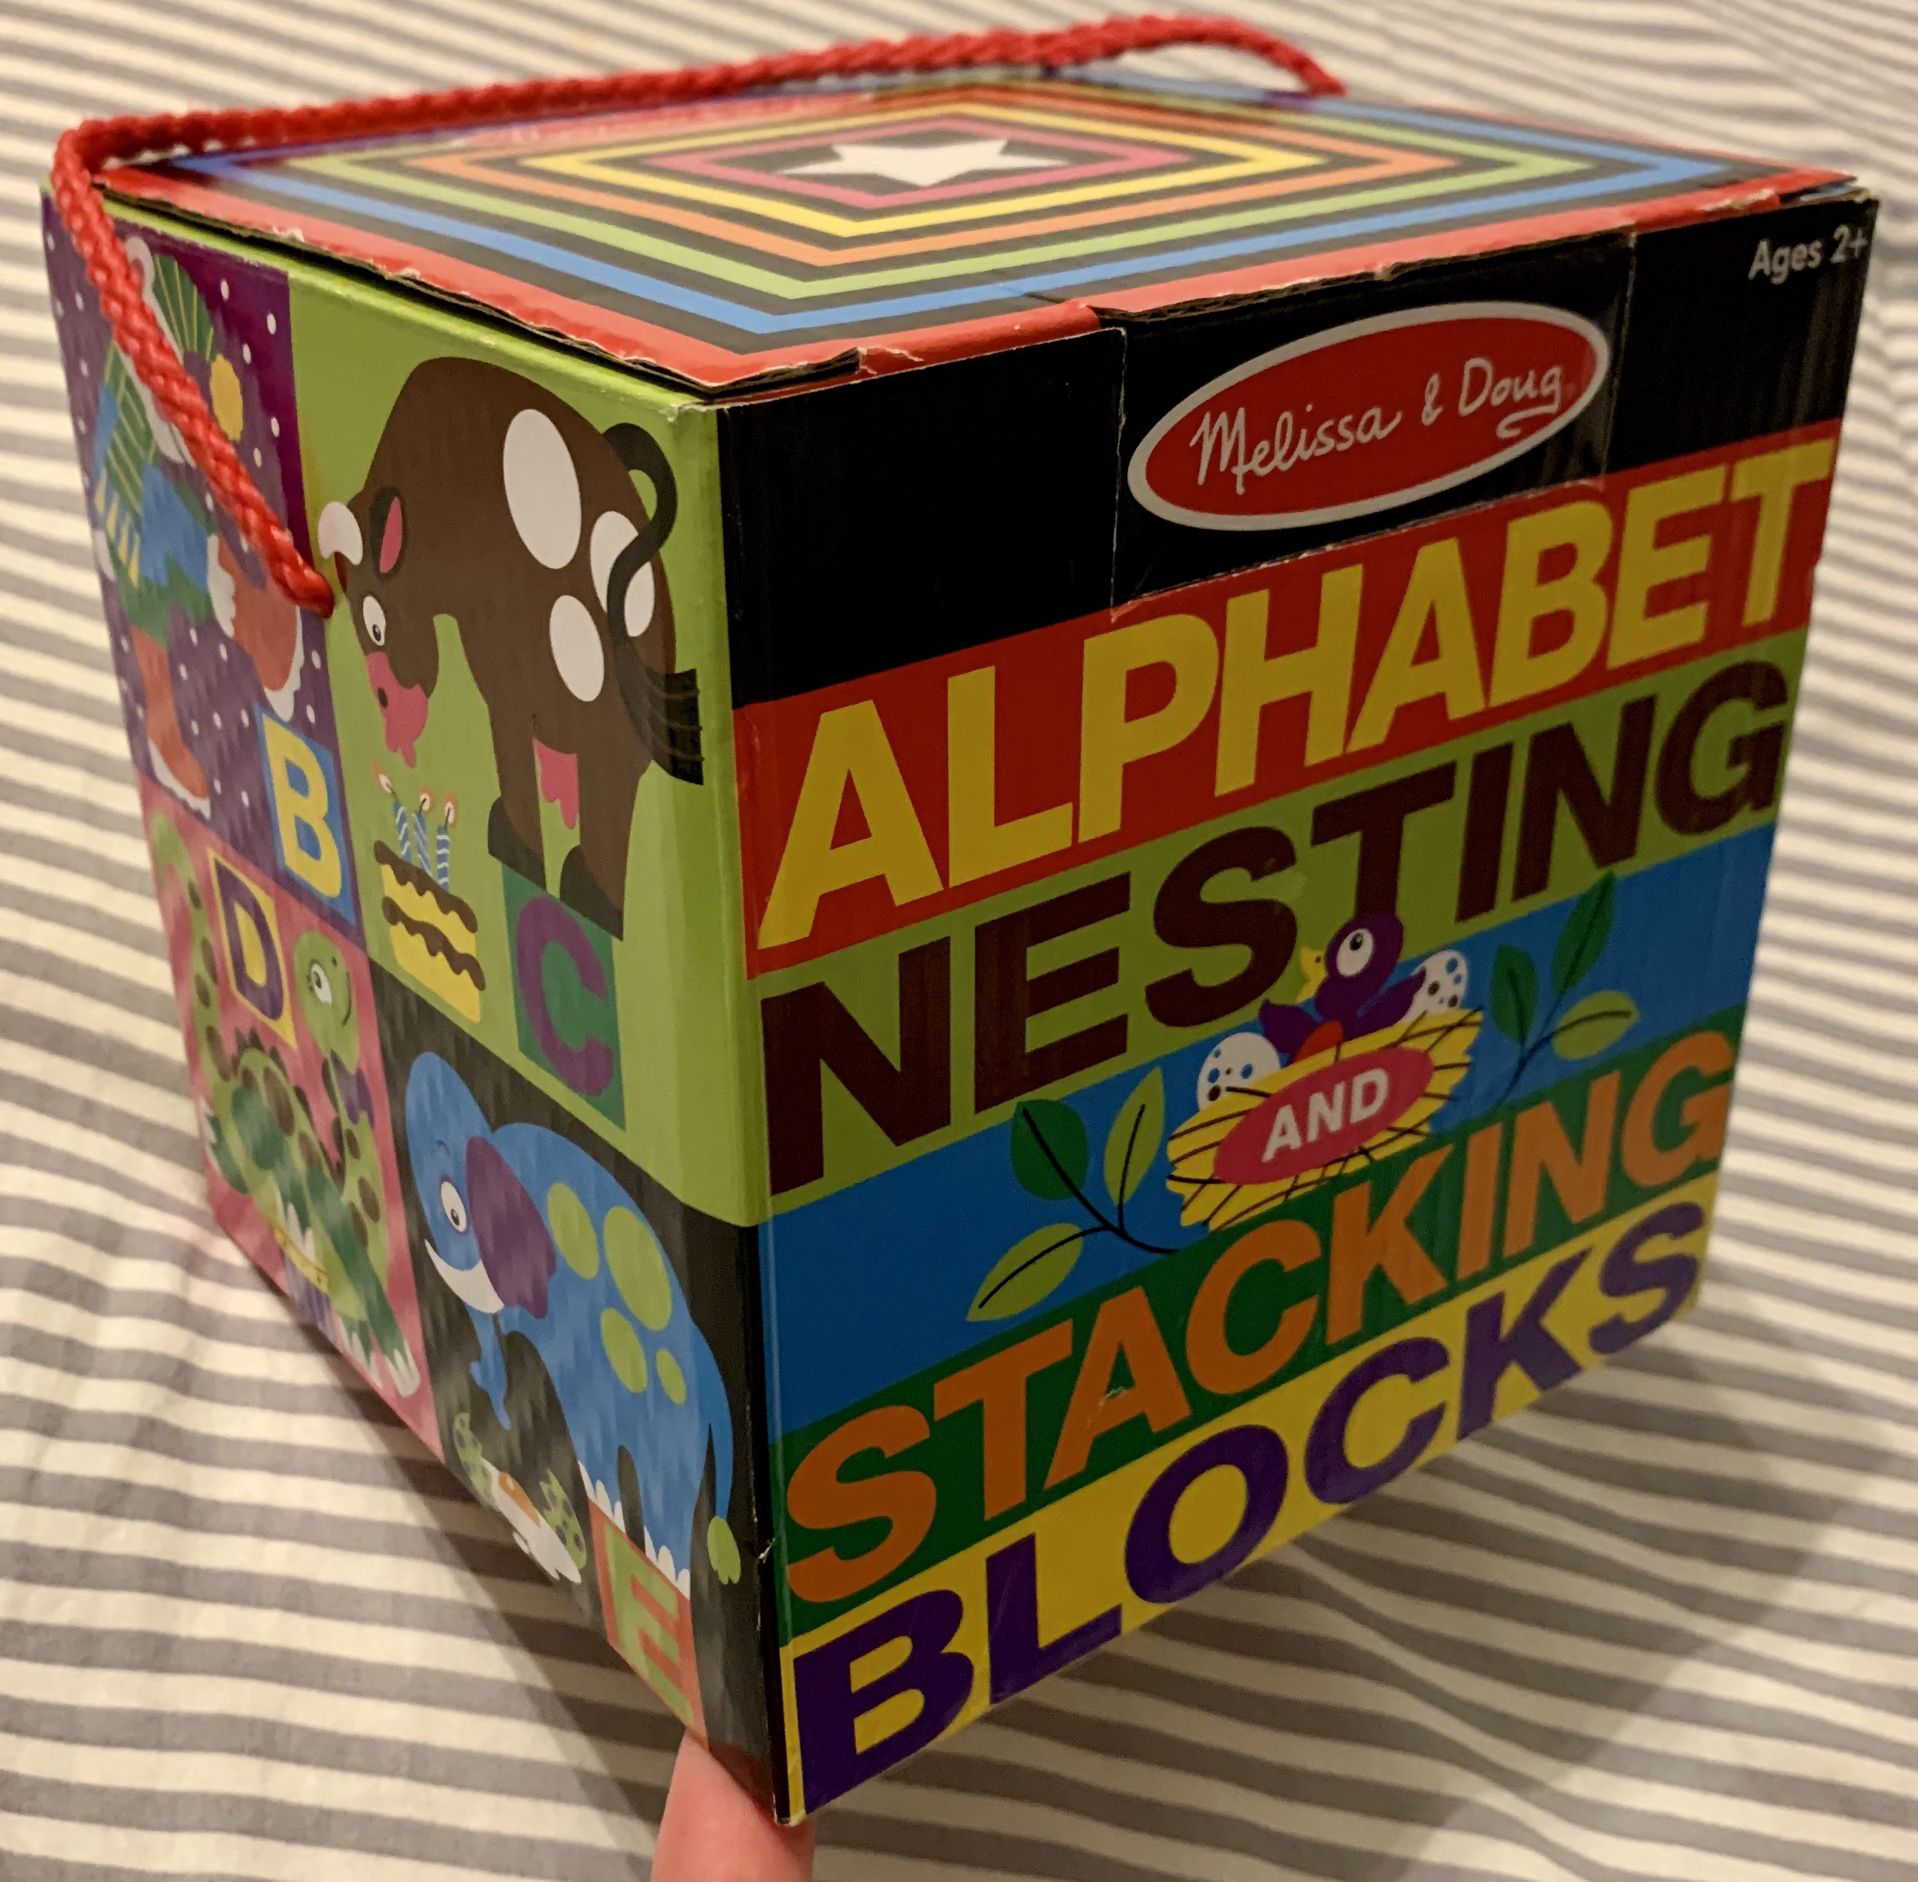 ABC Nesting & Stacking Blocks - $10